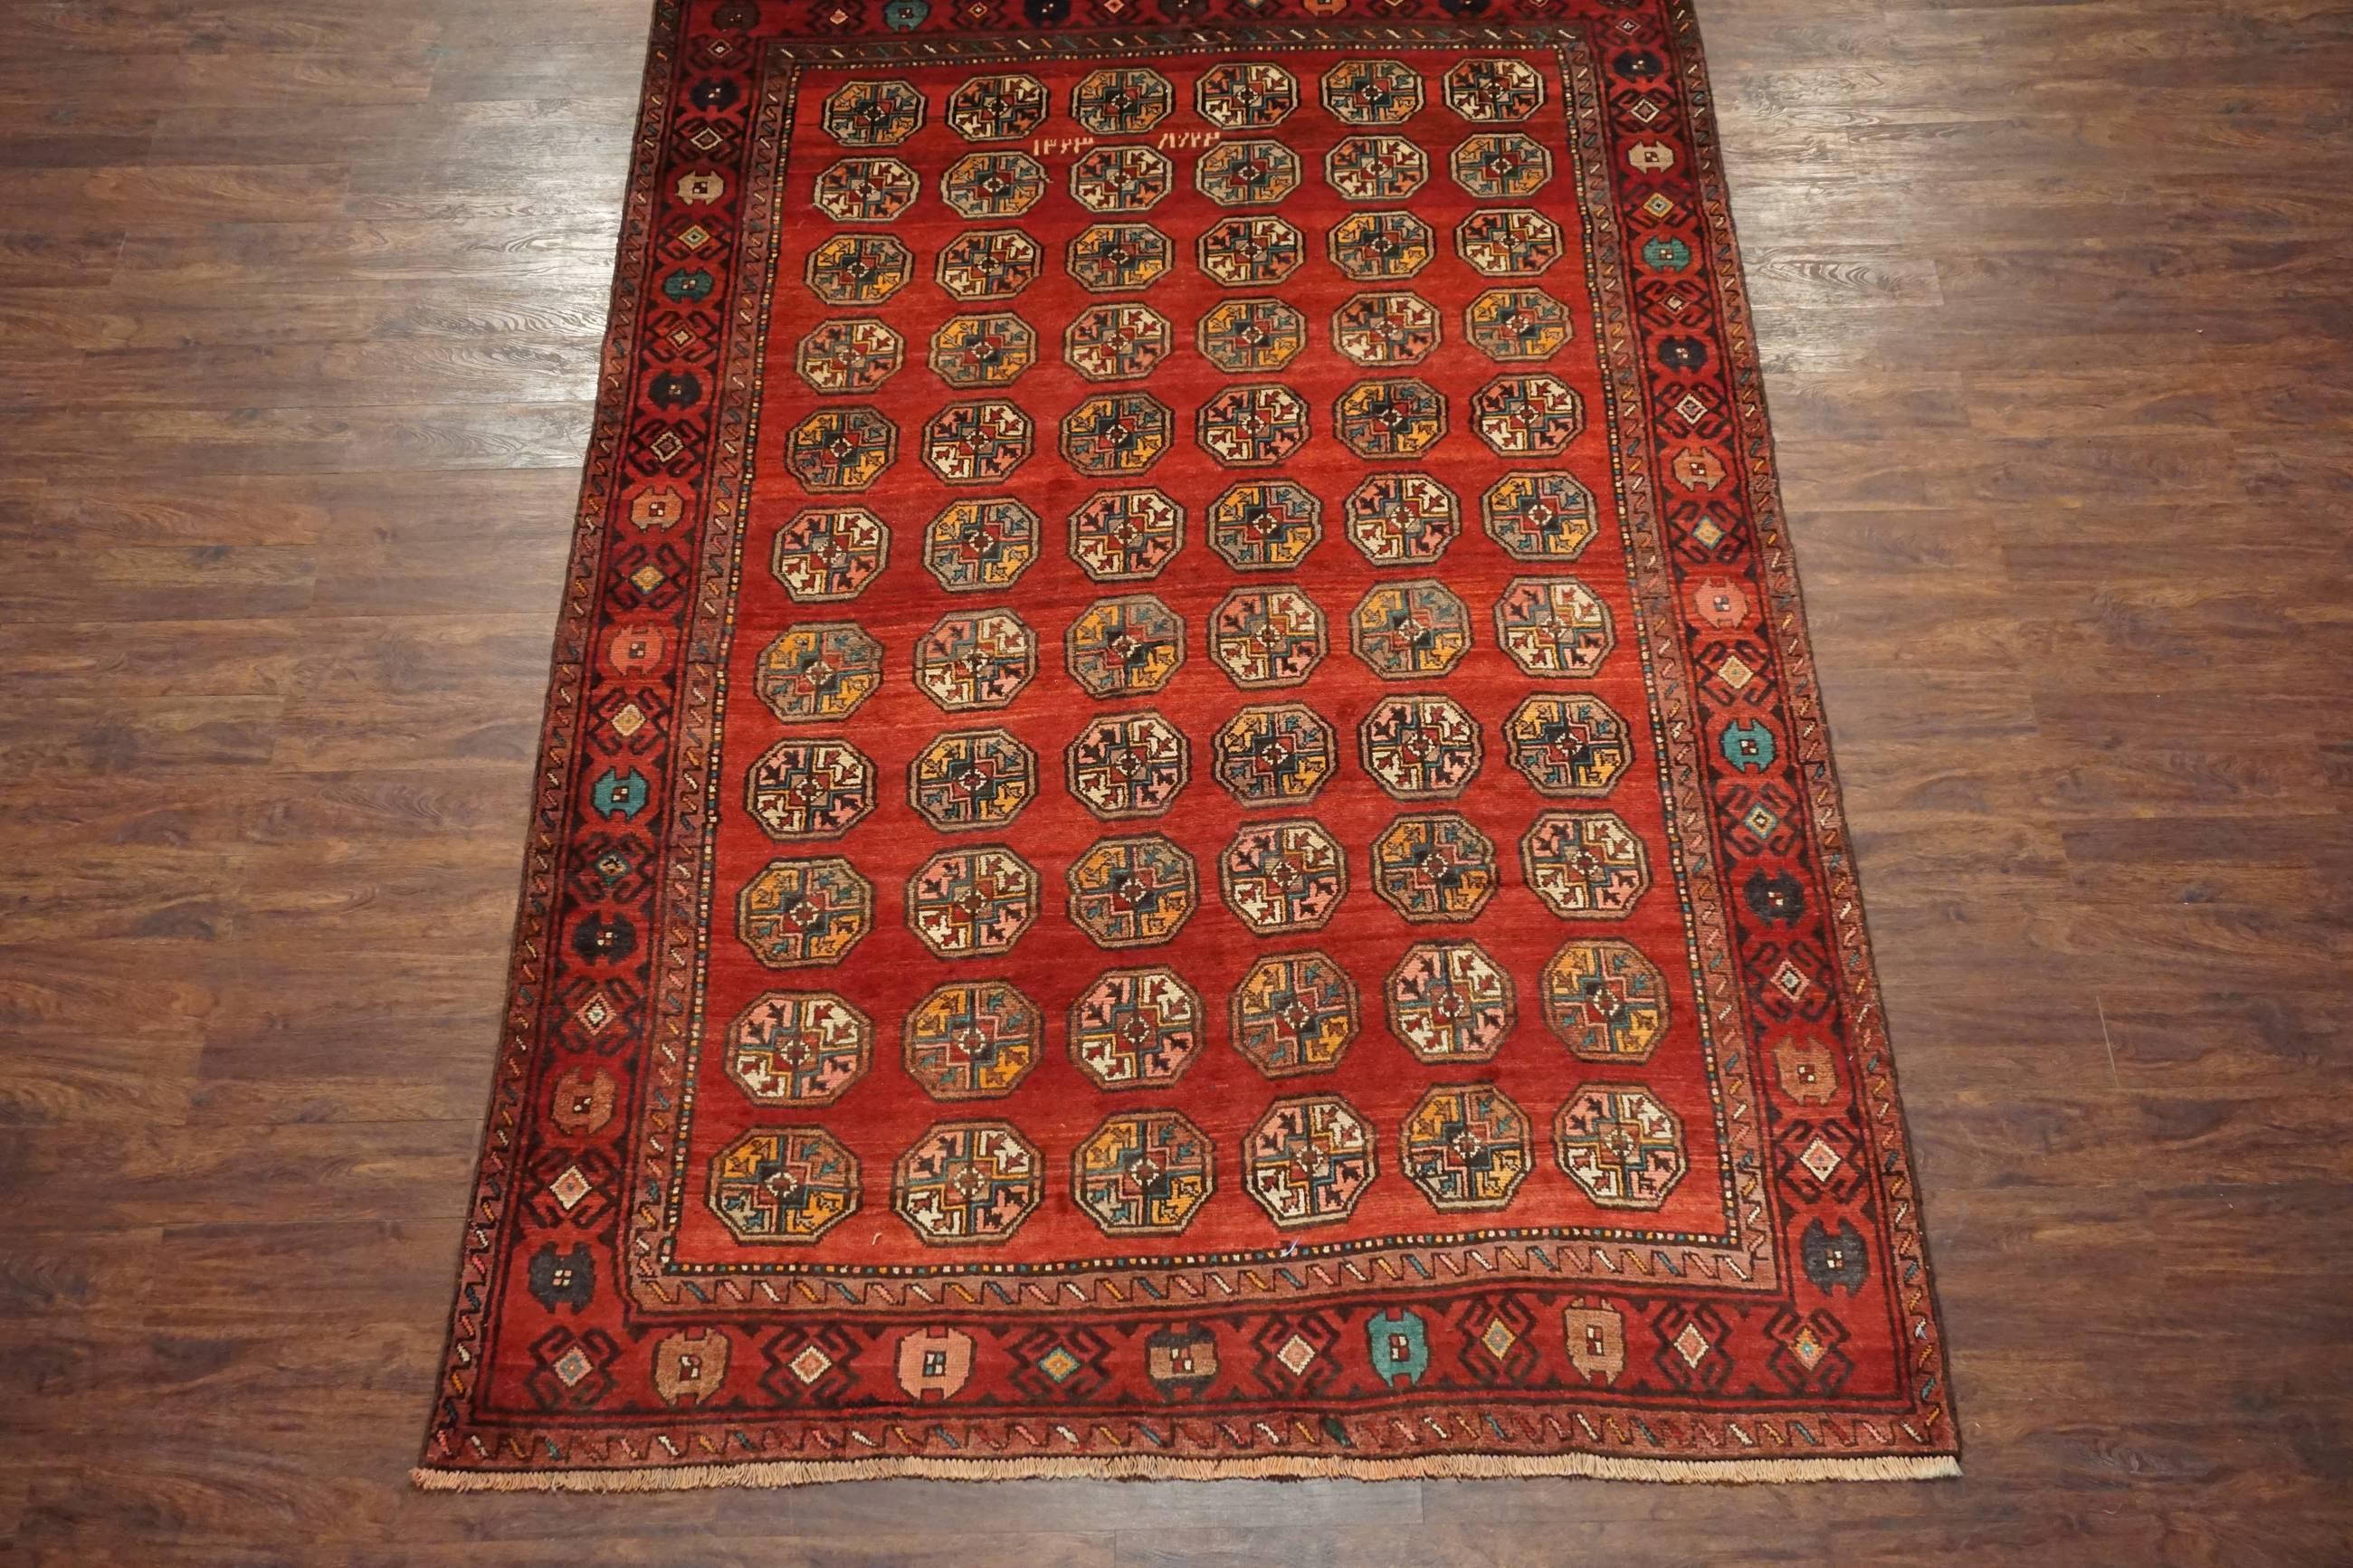 Antique Persian Tribal Bukhara rug

Dated 1909

6' 6